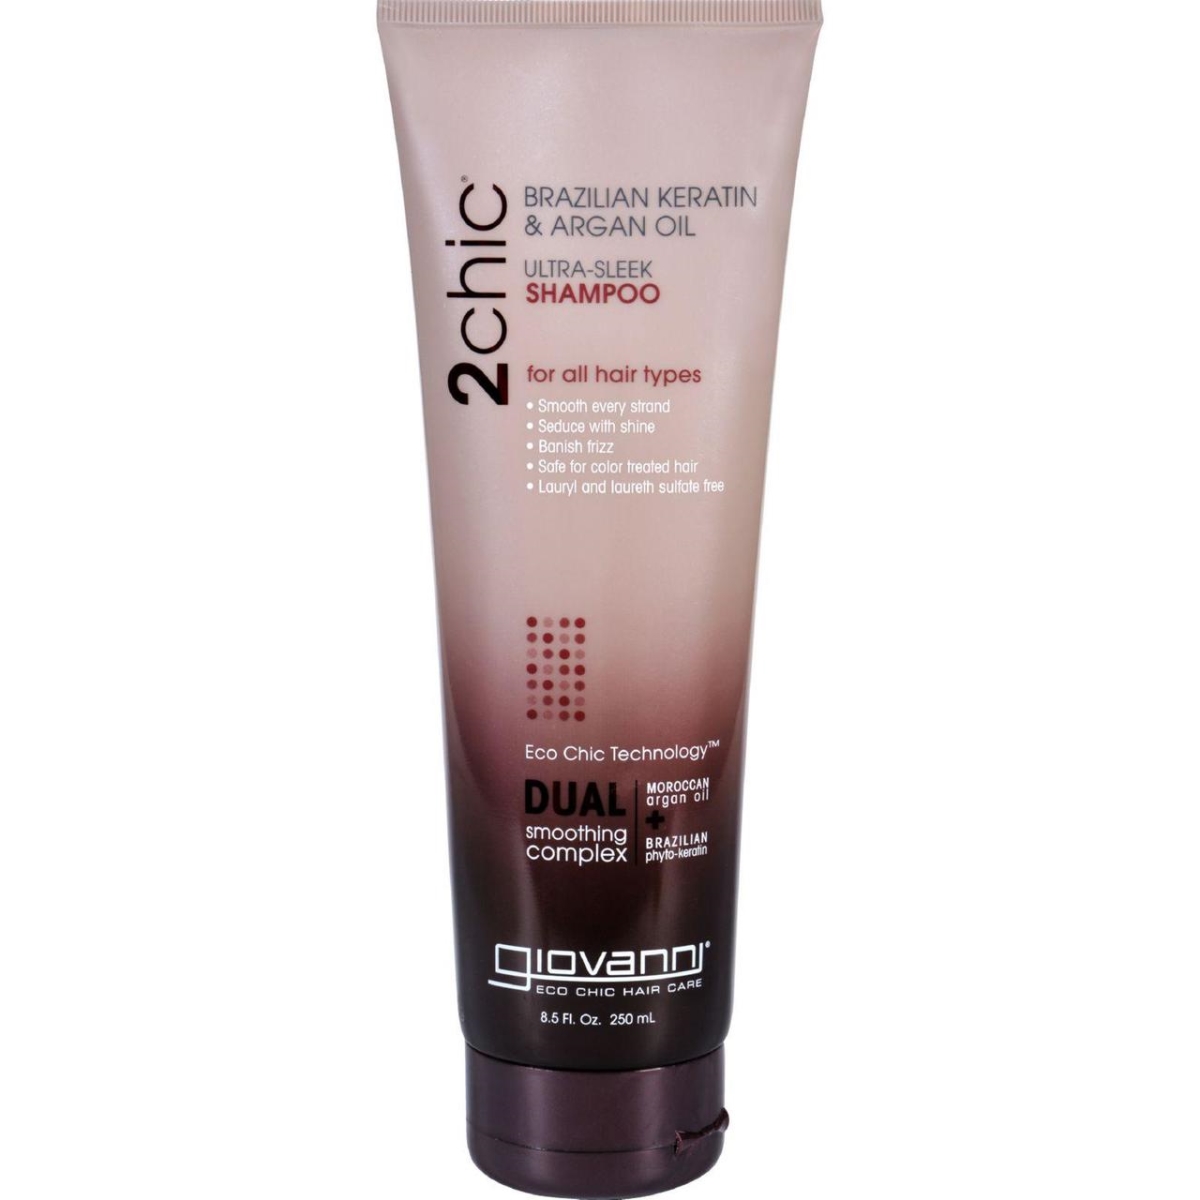 Hg1084516 8.5 Fl Oz 2chic Ultra-sleek Shampoo With Brazilian Keratin & Argan Oil